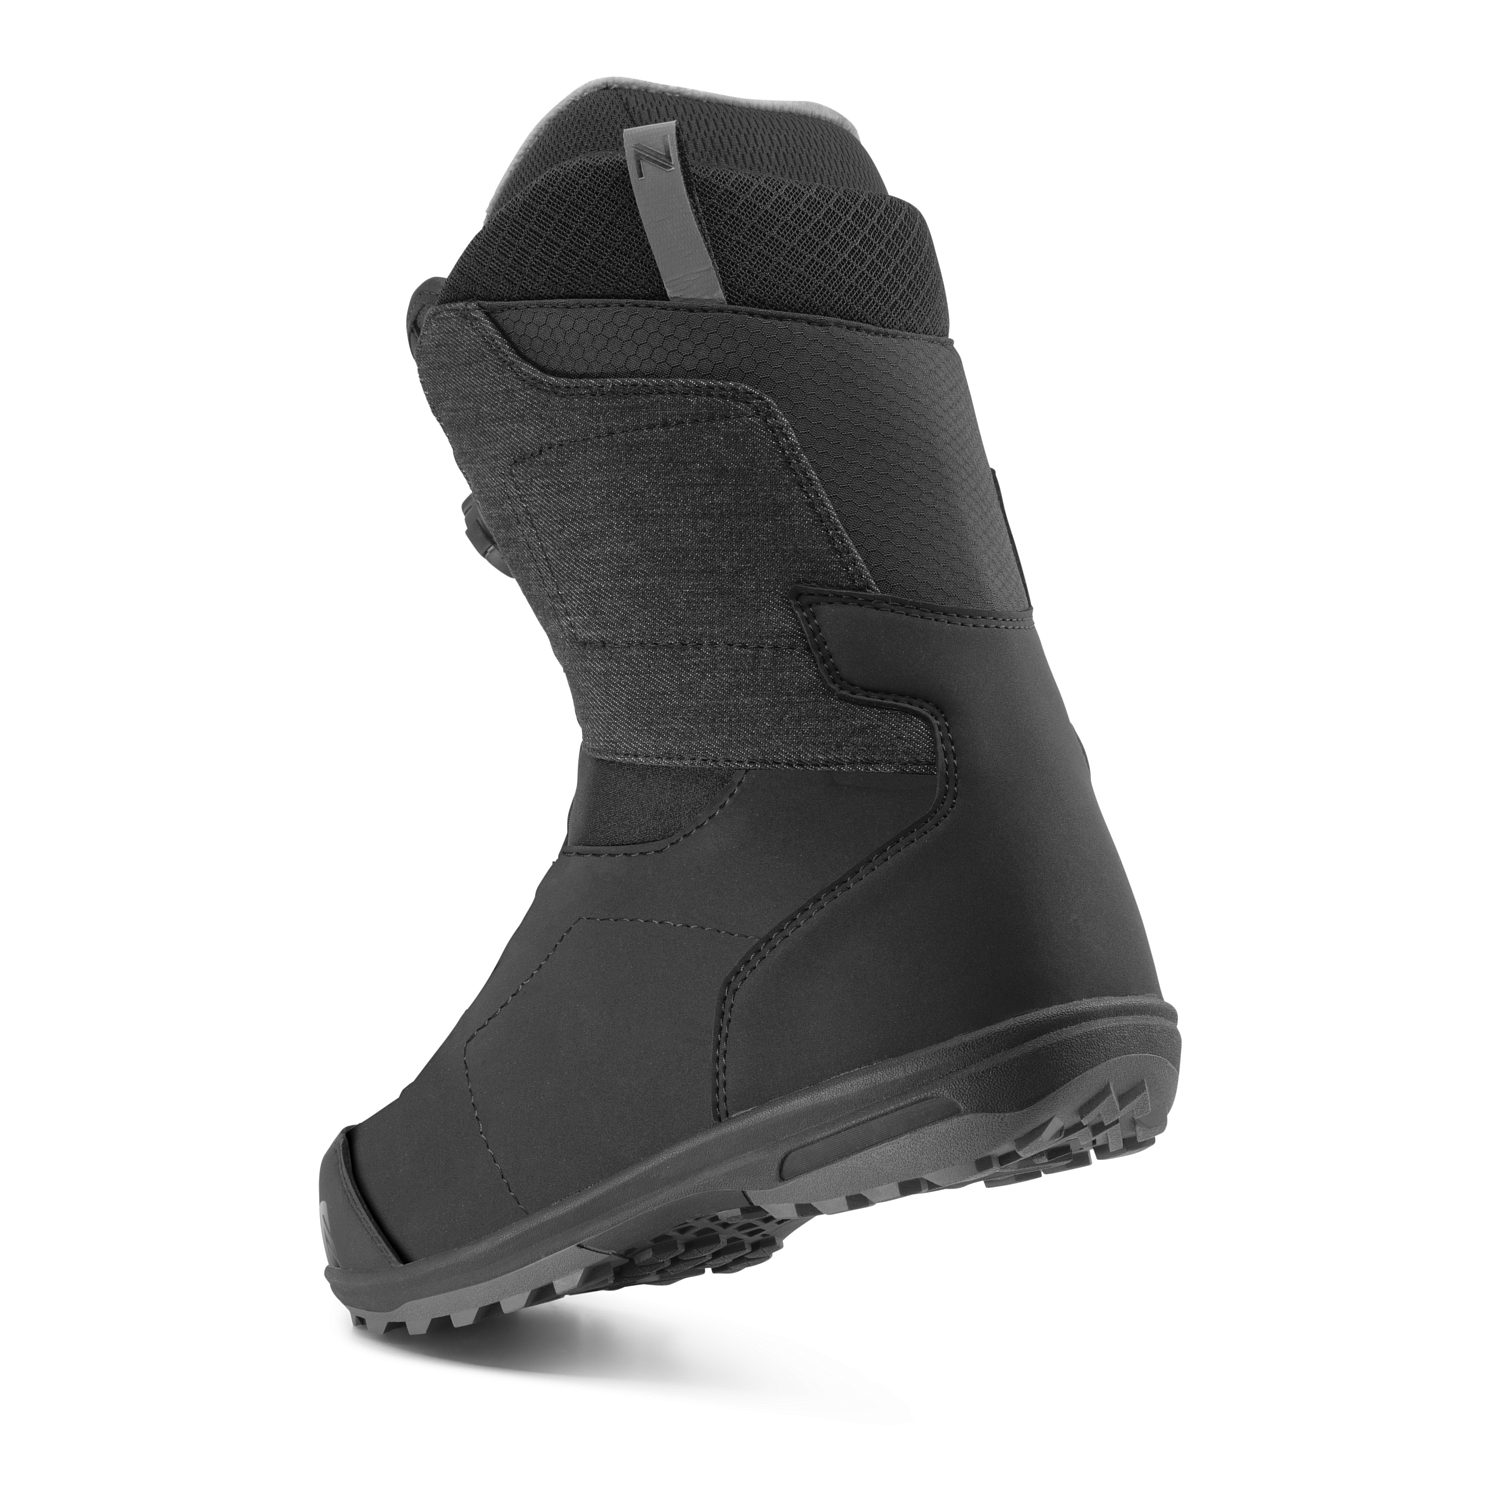 Ботинки для сноуборда NIDECKER 2020-21 Aero Black